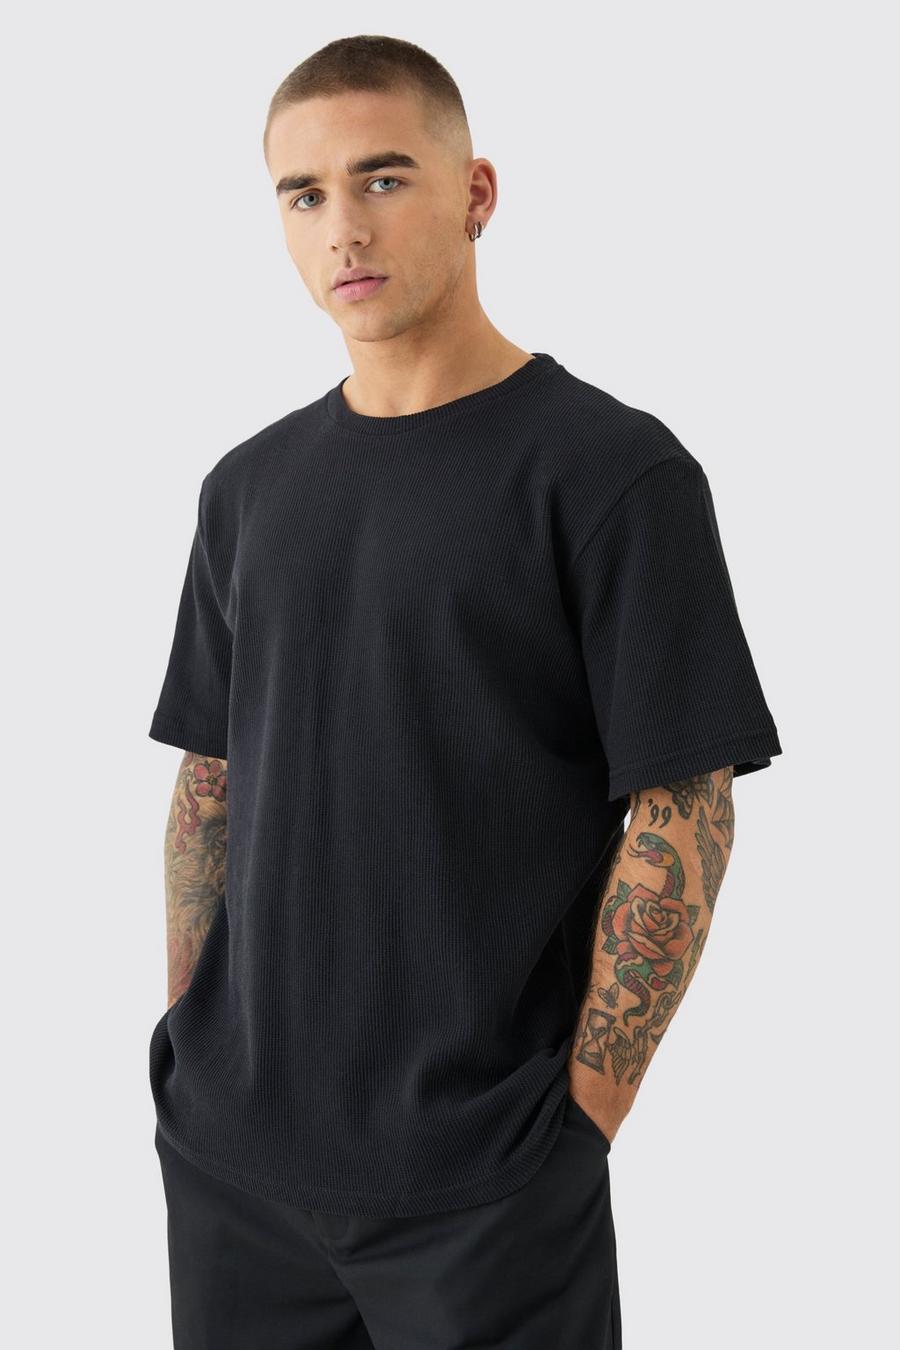 Camiseta de tela gofre, Black